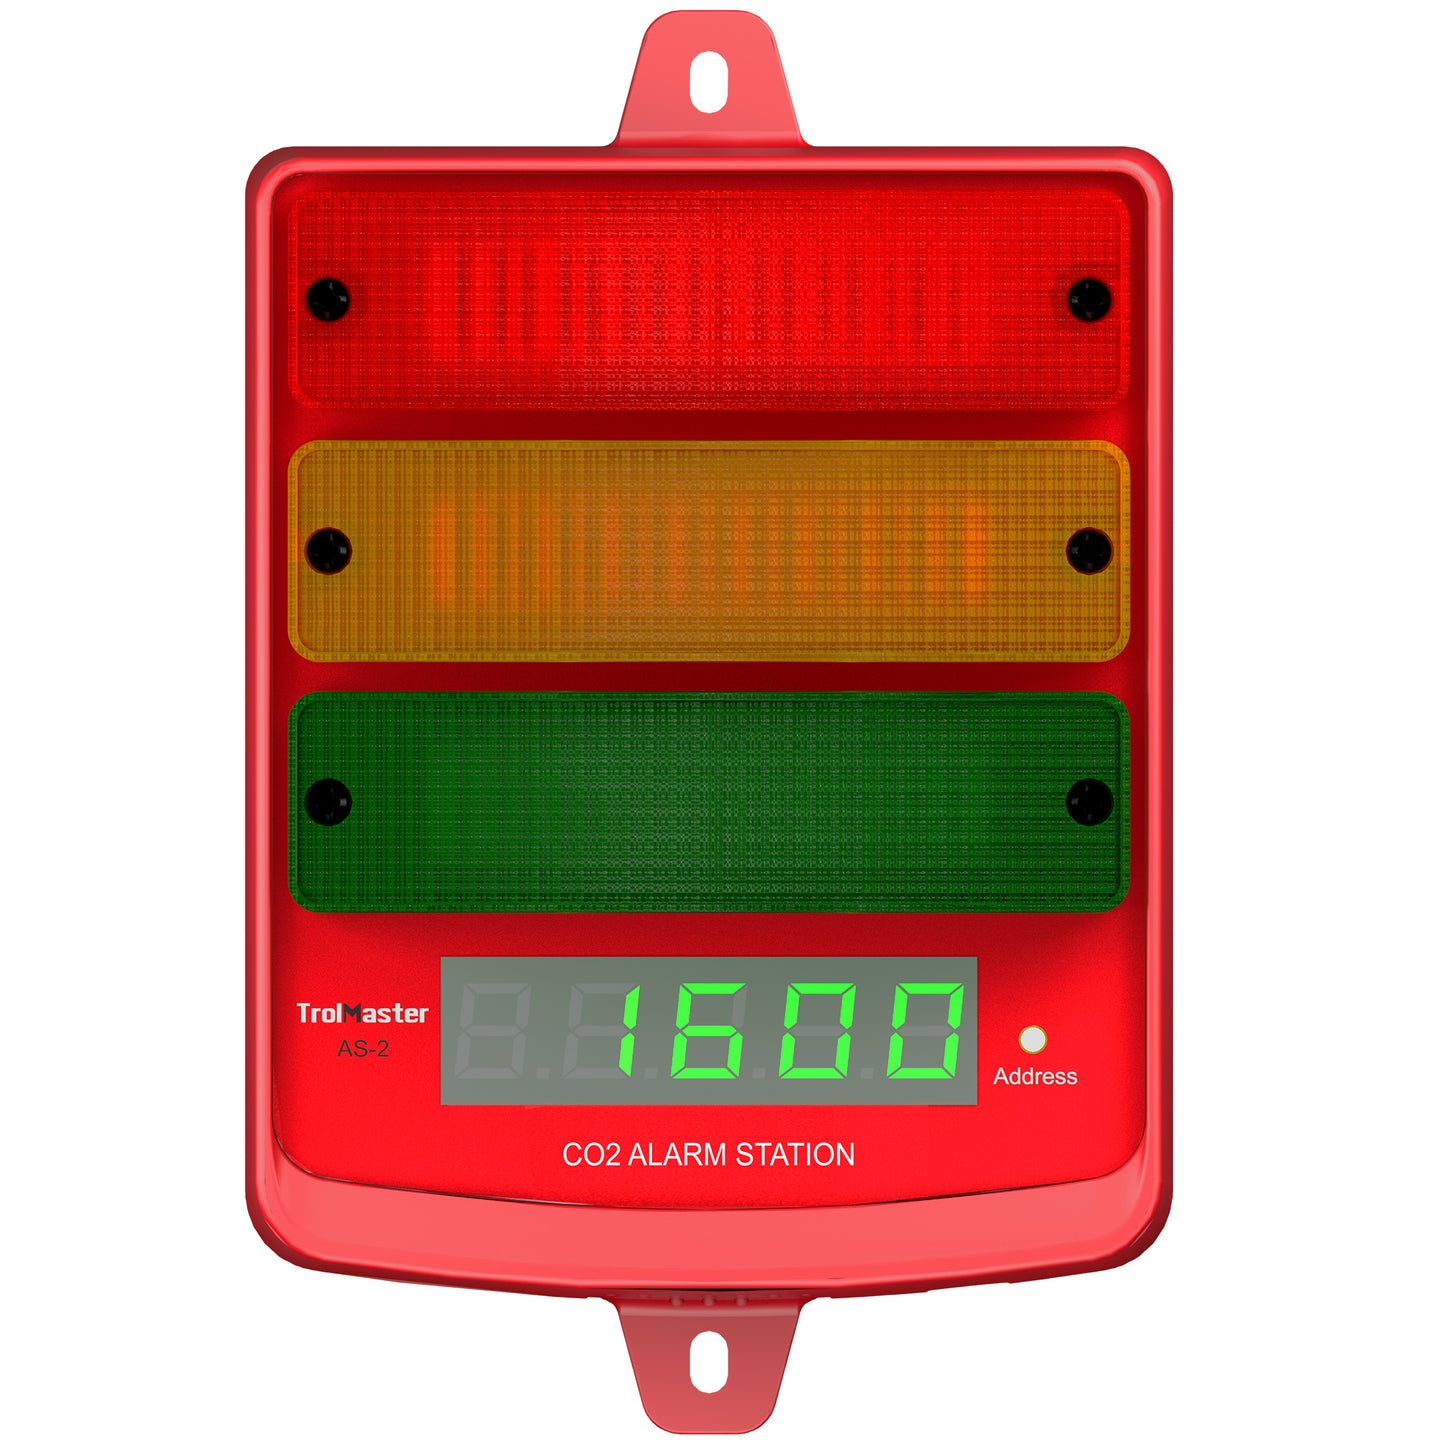 TrolMaster CO2 Alarm Station w/ LED